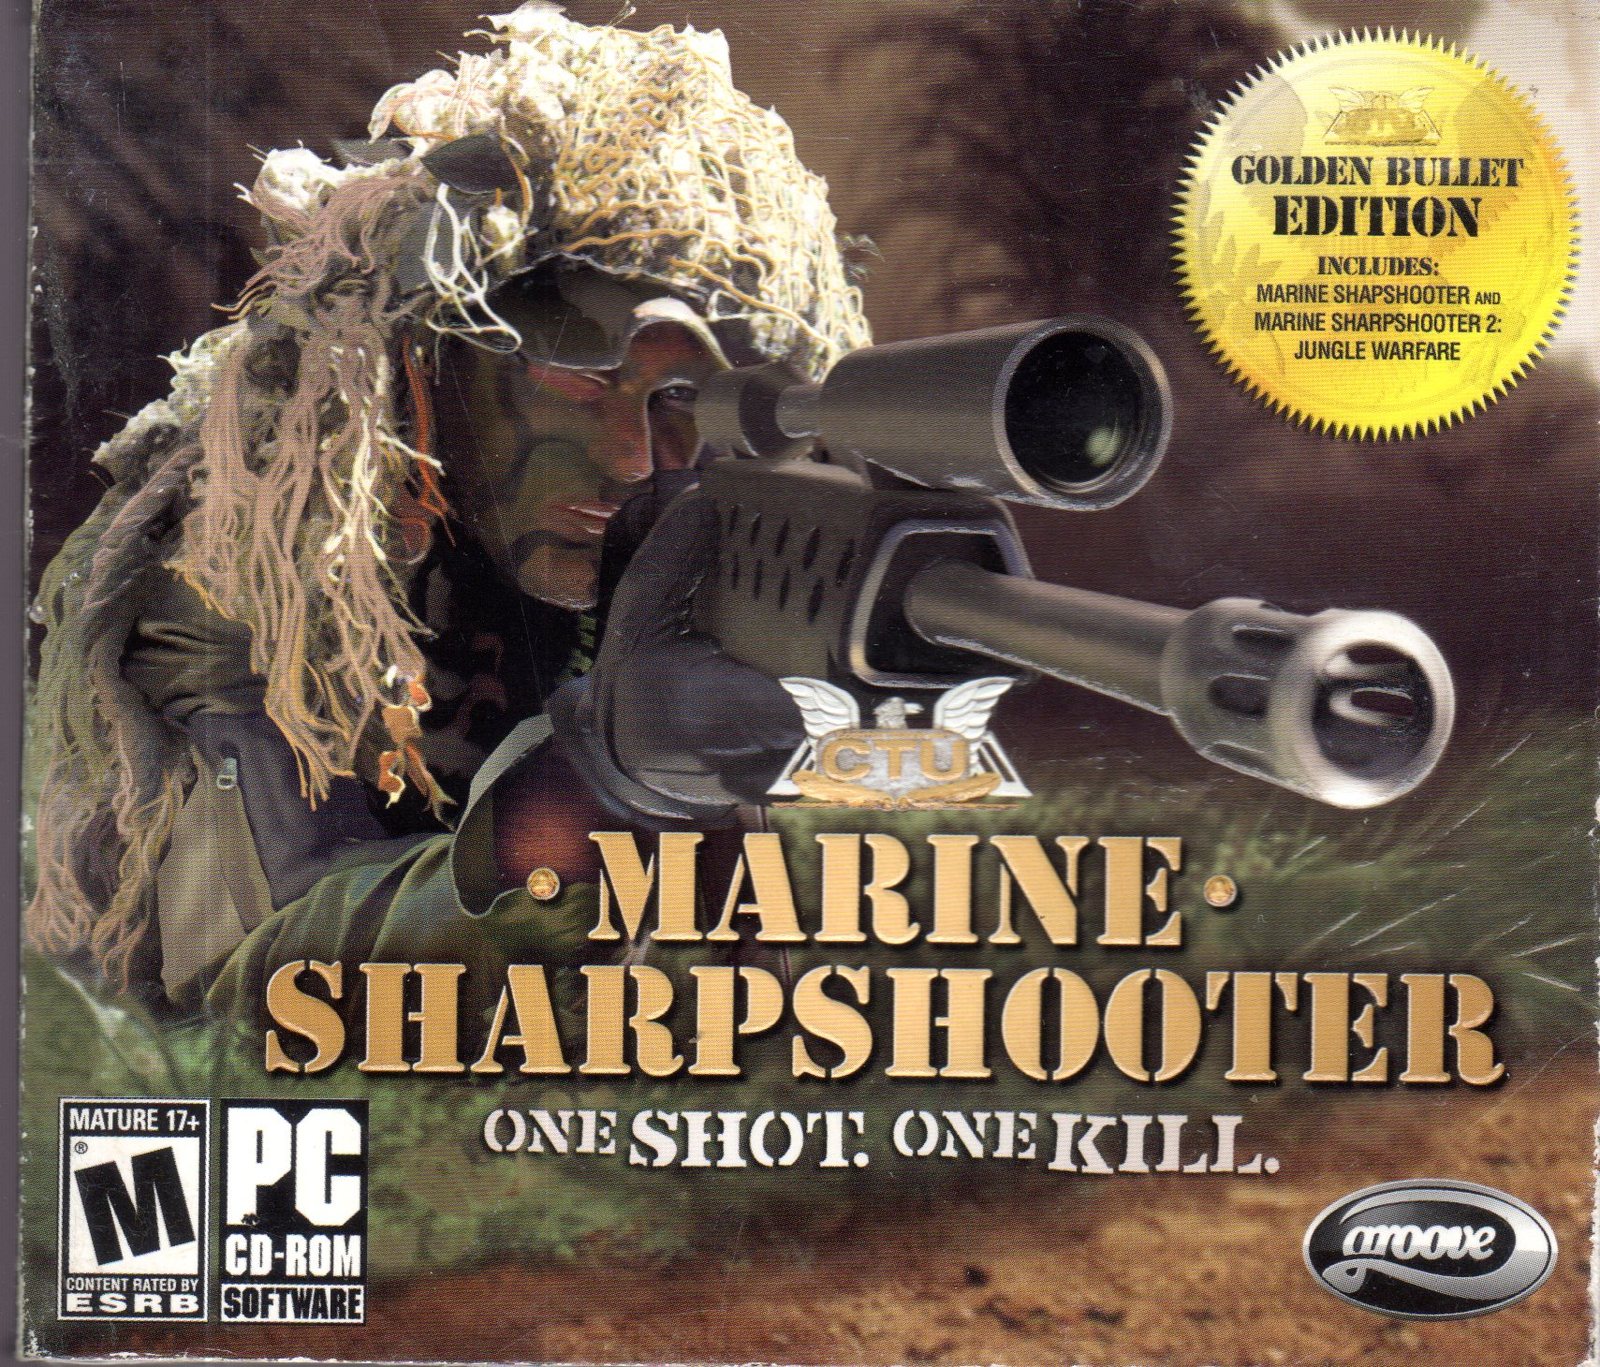 Sharpshooter 2. Marine Sharpshooter 2. CTU: Marine Sharpshooter. Marine Sharpshooter 3. Marine Sharpshooter 2: Jungle Warfare.